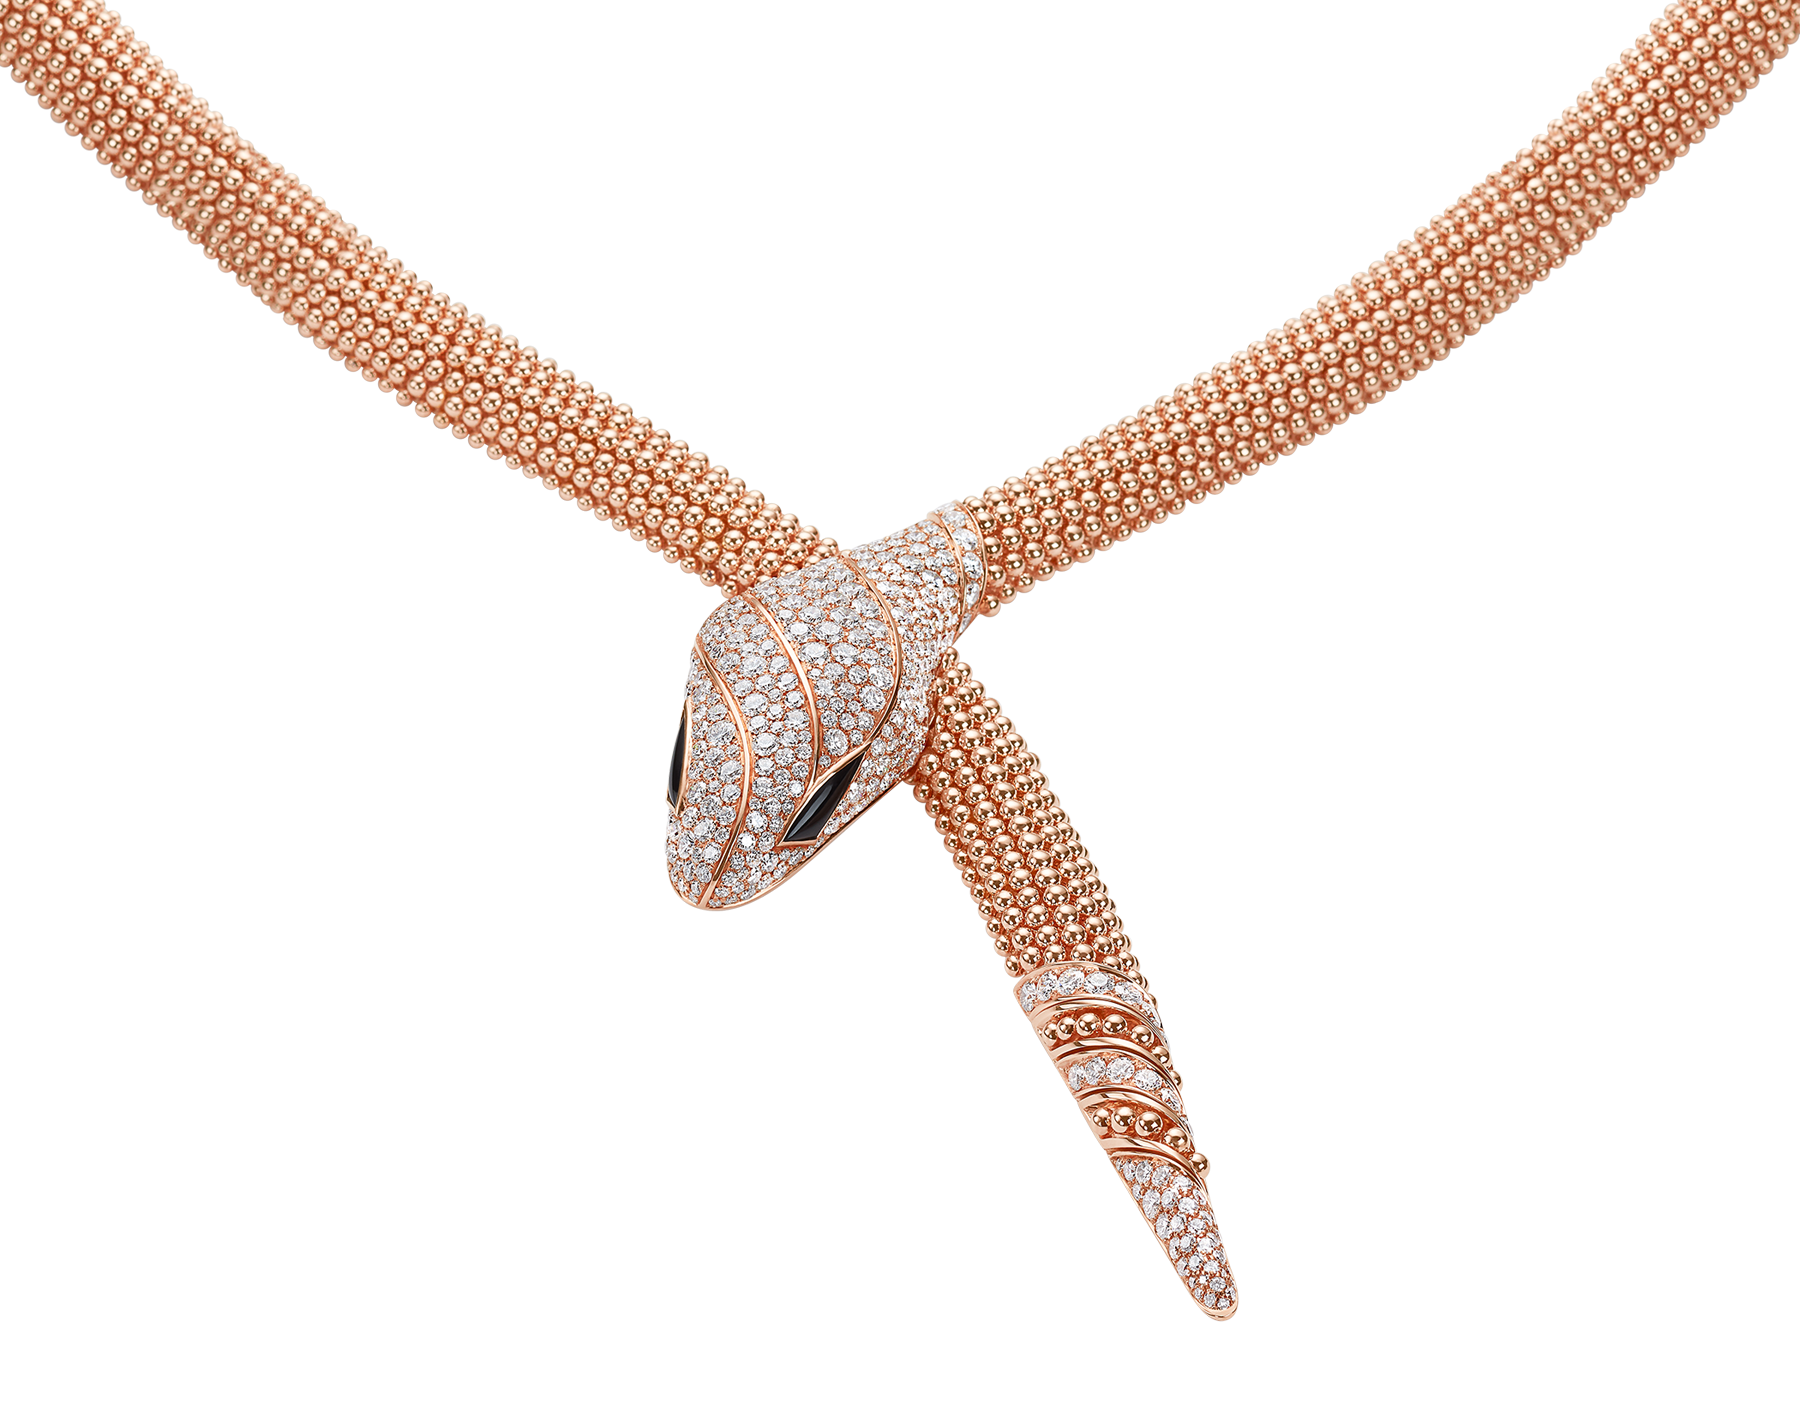 Naomi Watts Wears a Gorgeous Jeweled Snake Necklace to Bulgari Exhibit  Launch!: Photo 3103208 | Naomi Watts Photos | Just Jared: Entertainment News